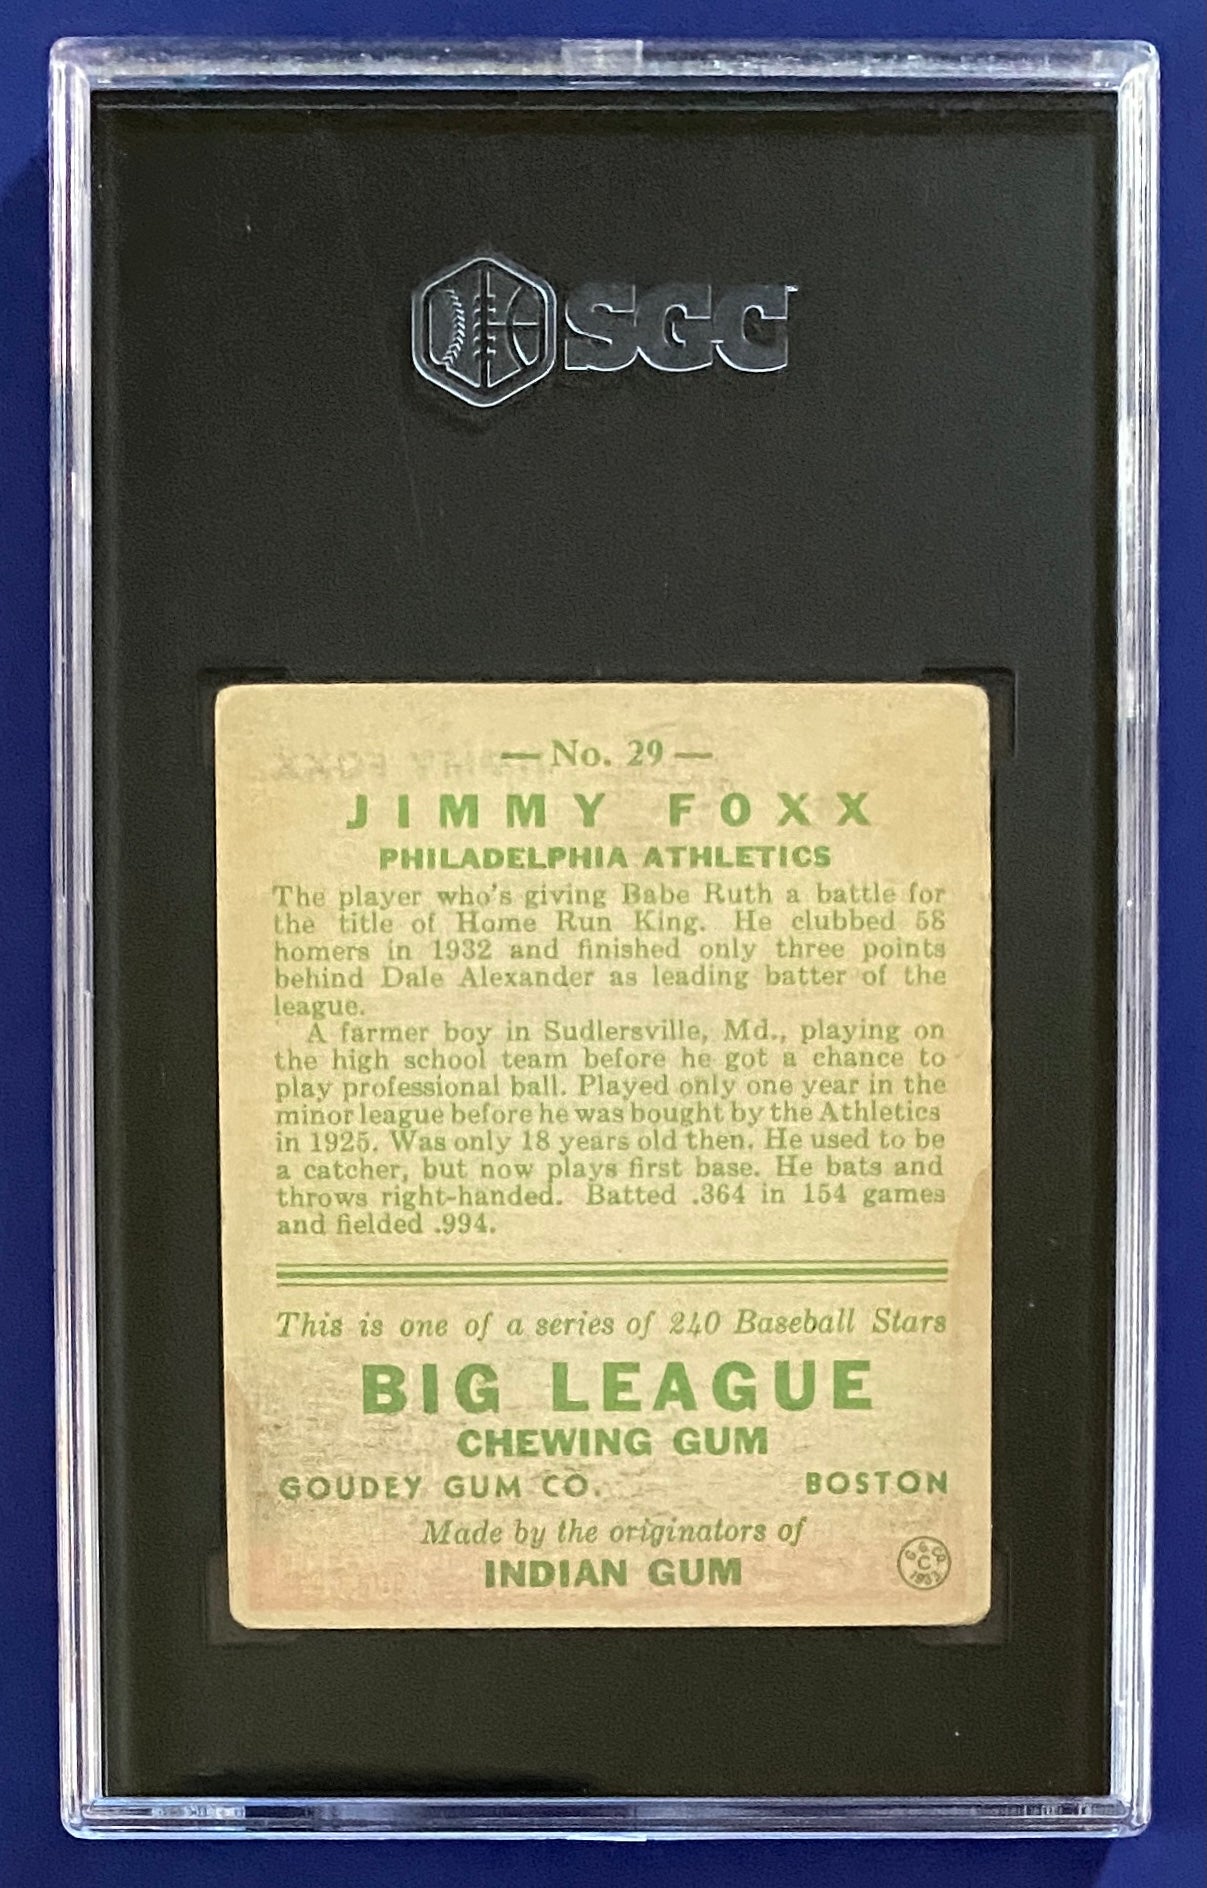 Jimmy Foxx RC 1933 Goudey #29 SGC 1